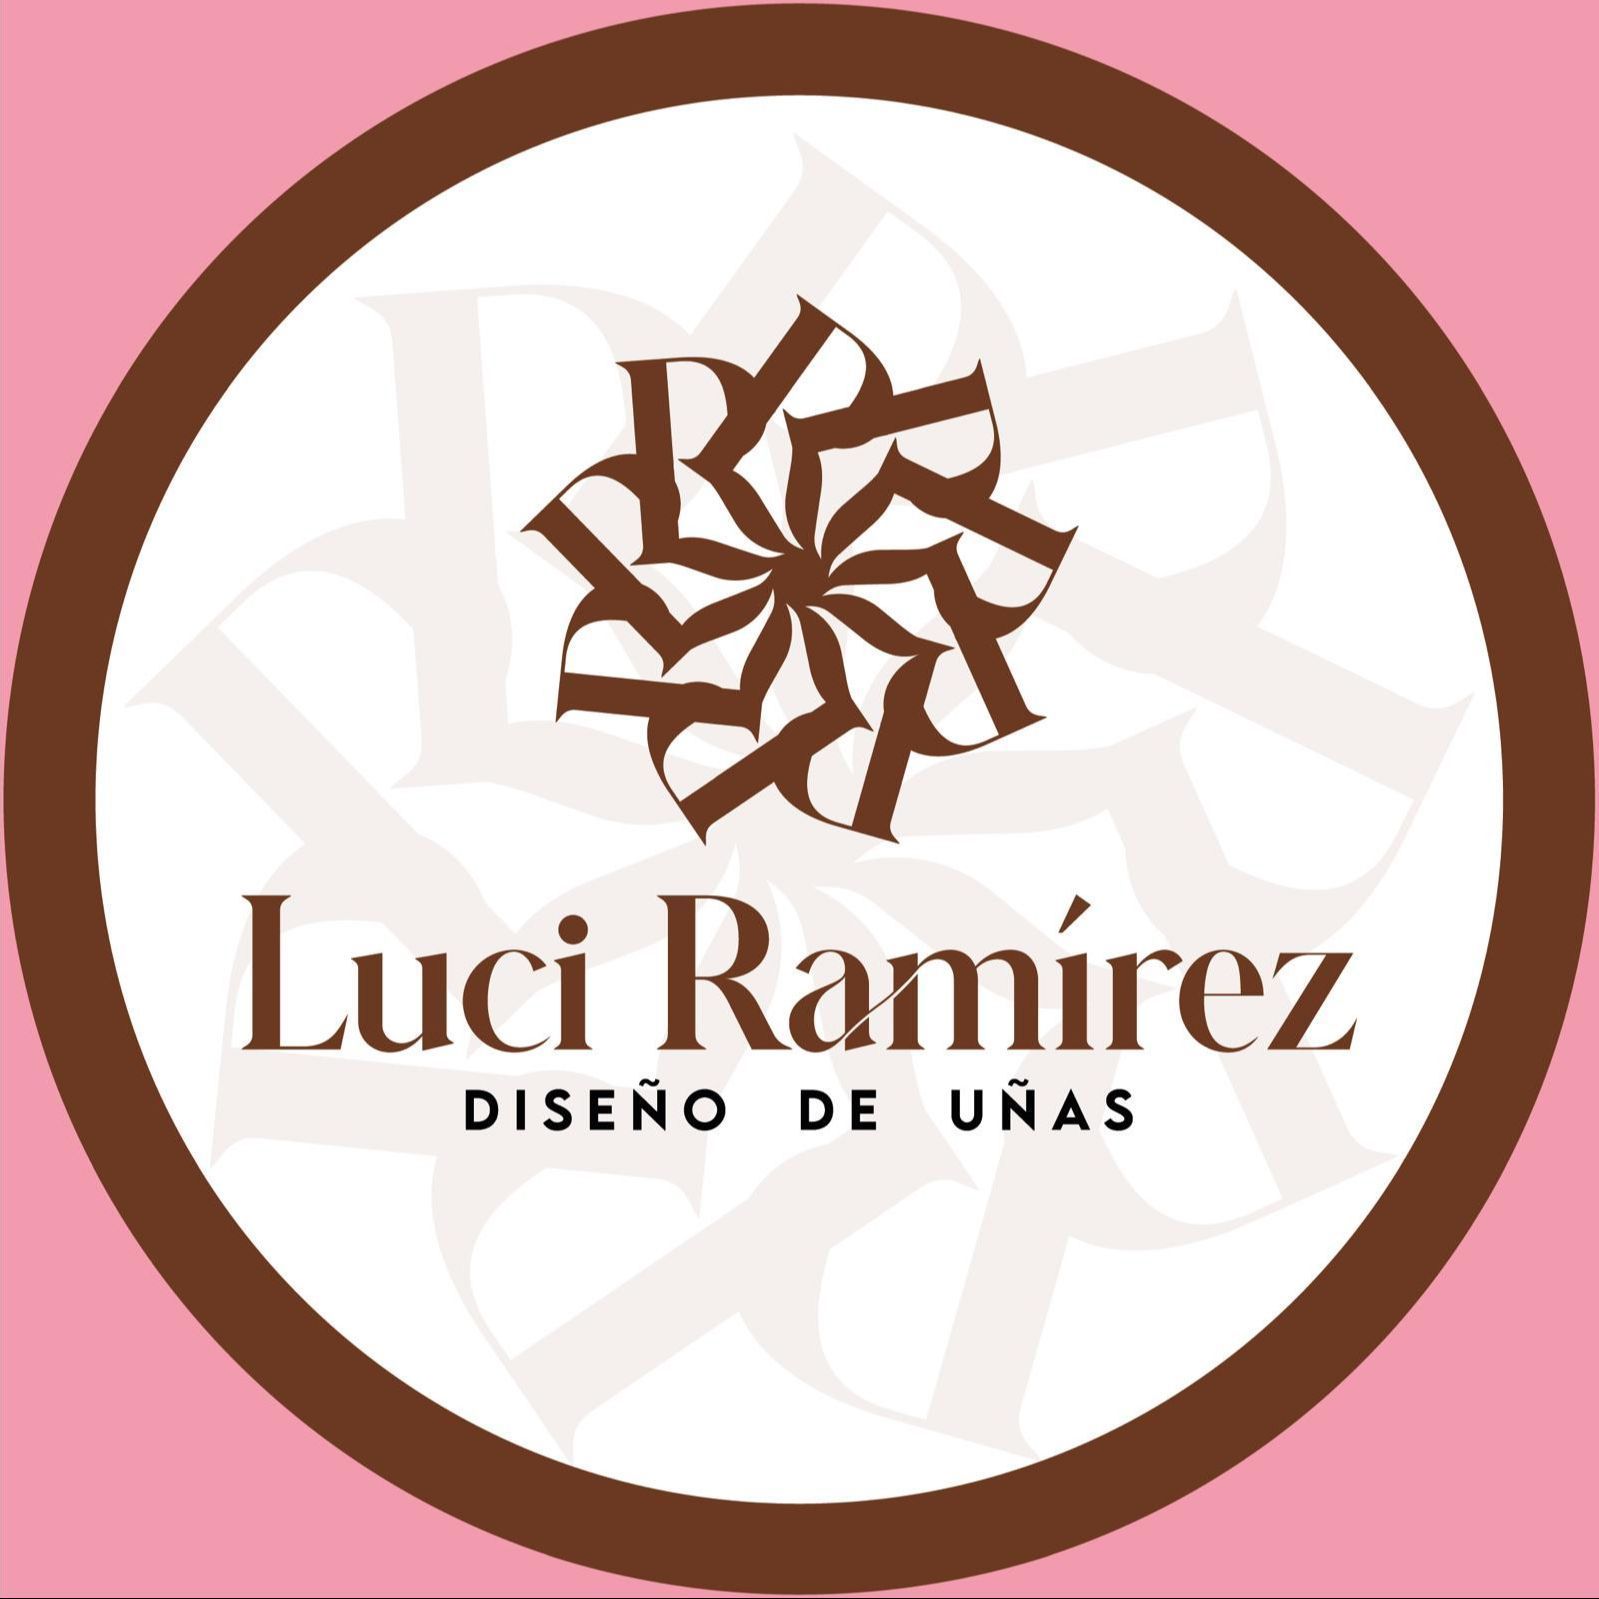 Luci Ramirez en MB Mas Bella, Carretera de Carmona, 5, 41008, Sevilla